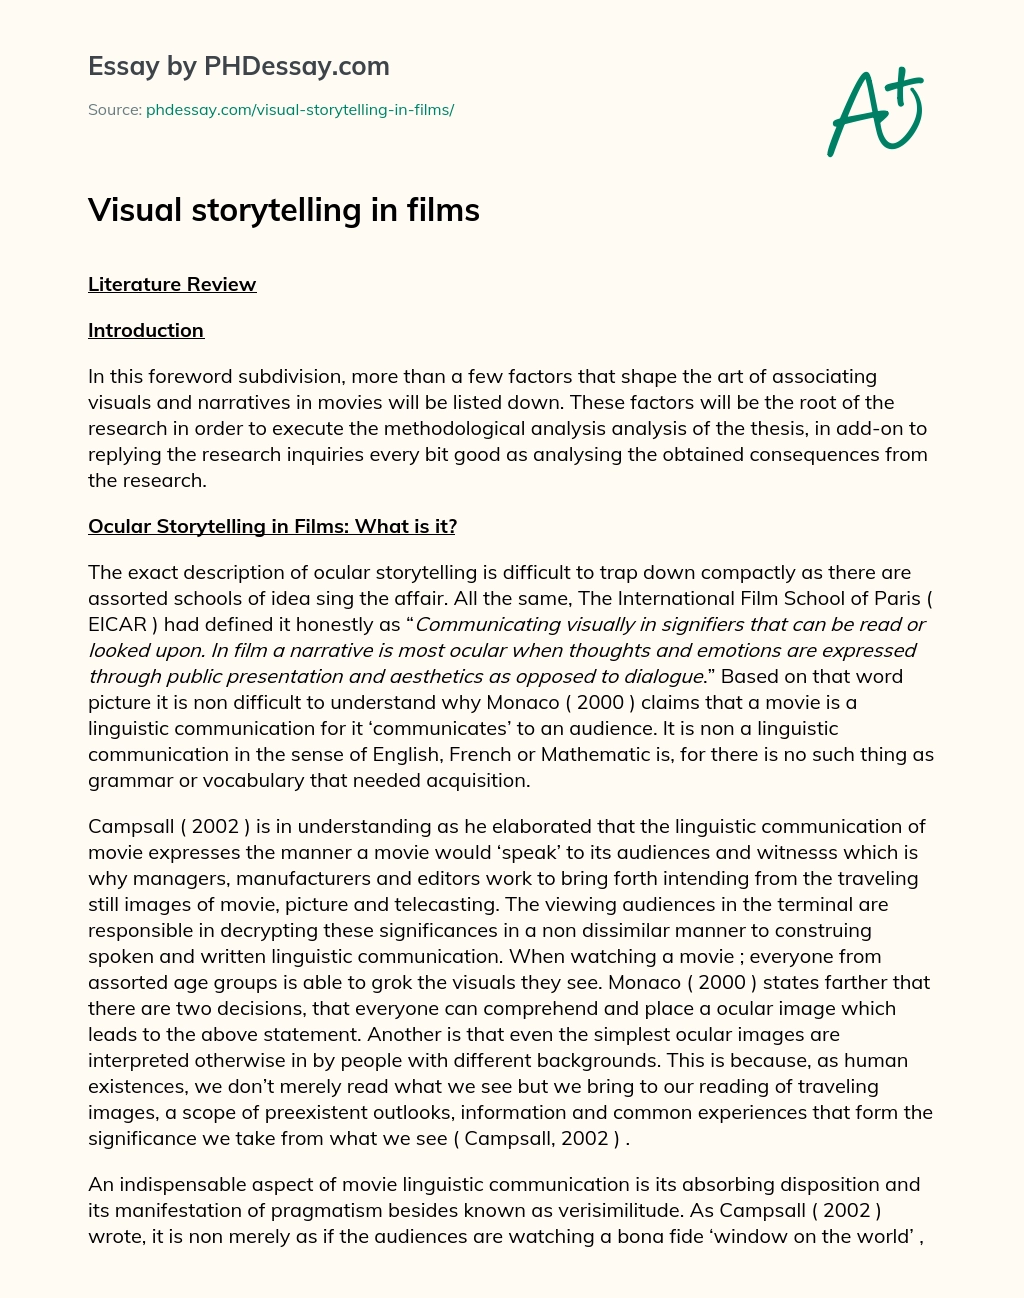 Visual storytelling in films essay